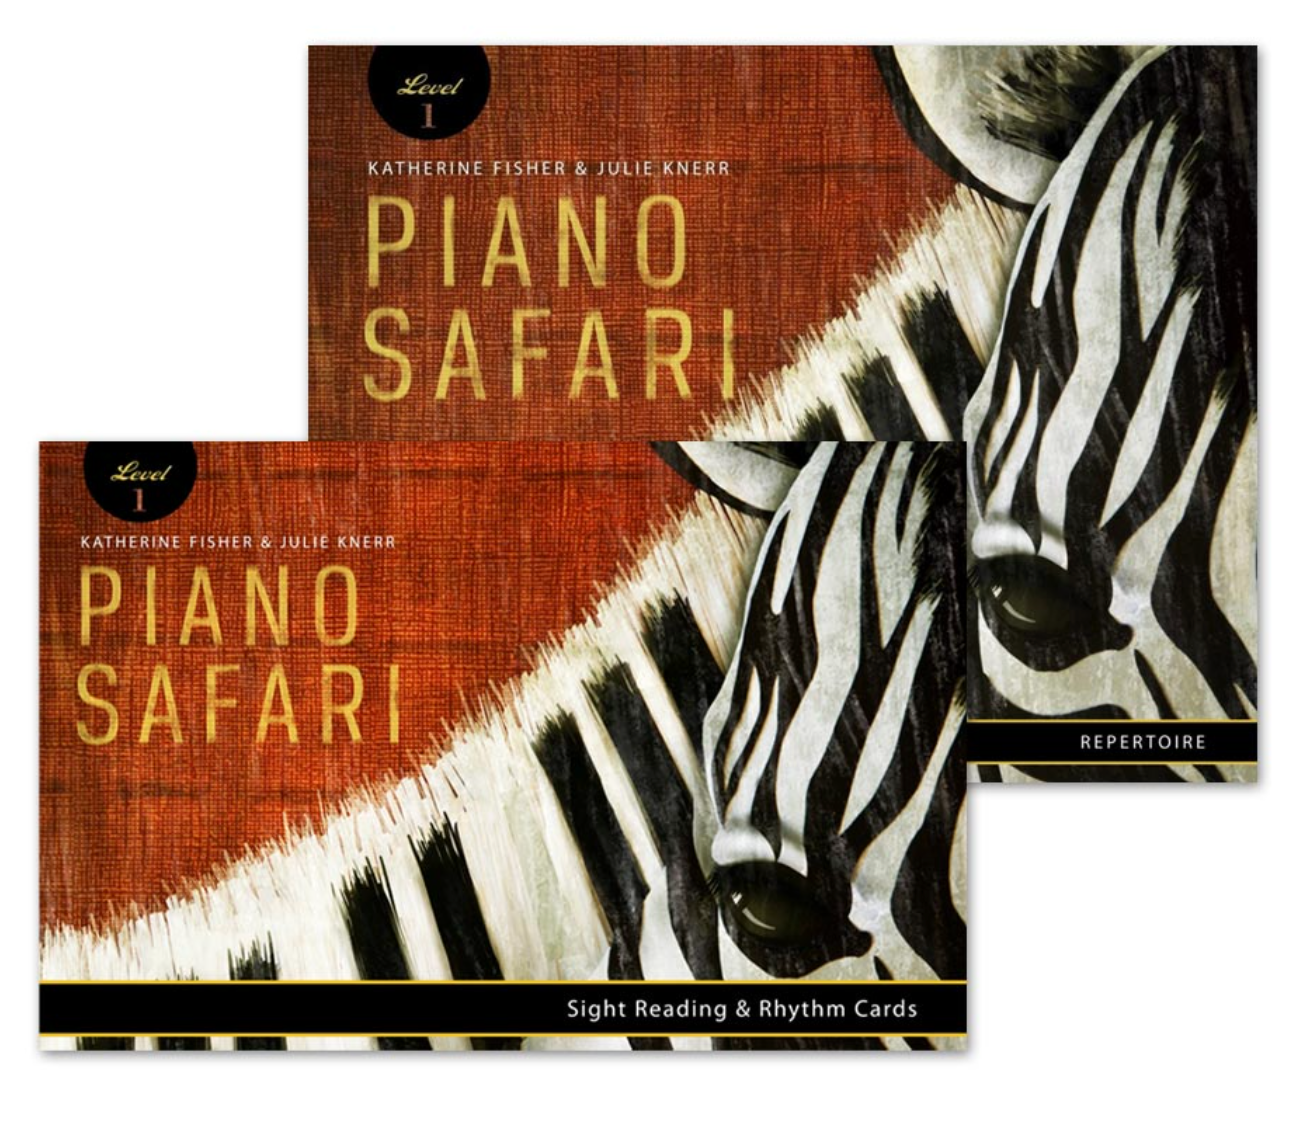 Piano Safari Level 1 Pack - Fisher Katherine; Hague Julie Knerr Piano Safari PNSF1004